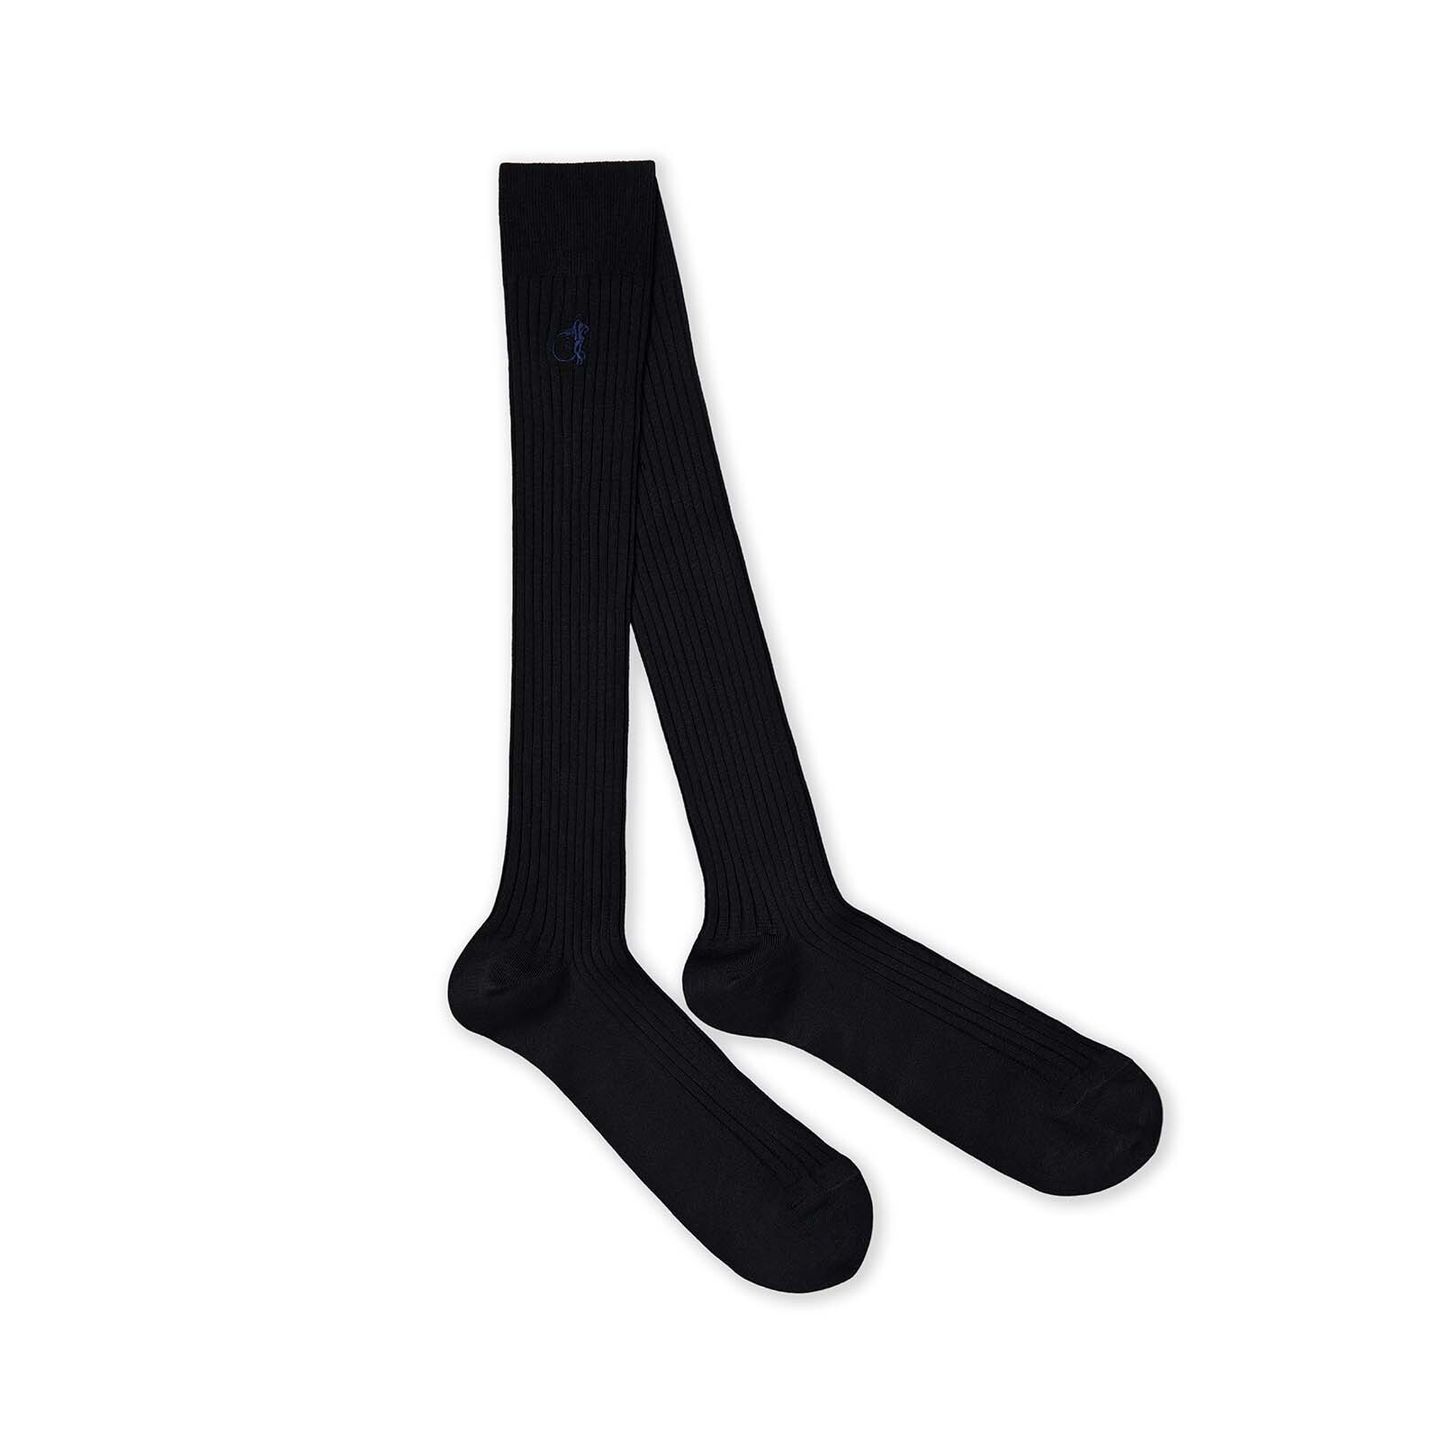 Simply Sartorial Knee High Socks